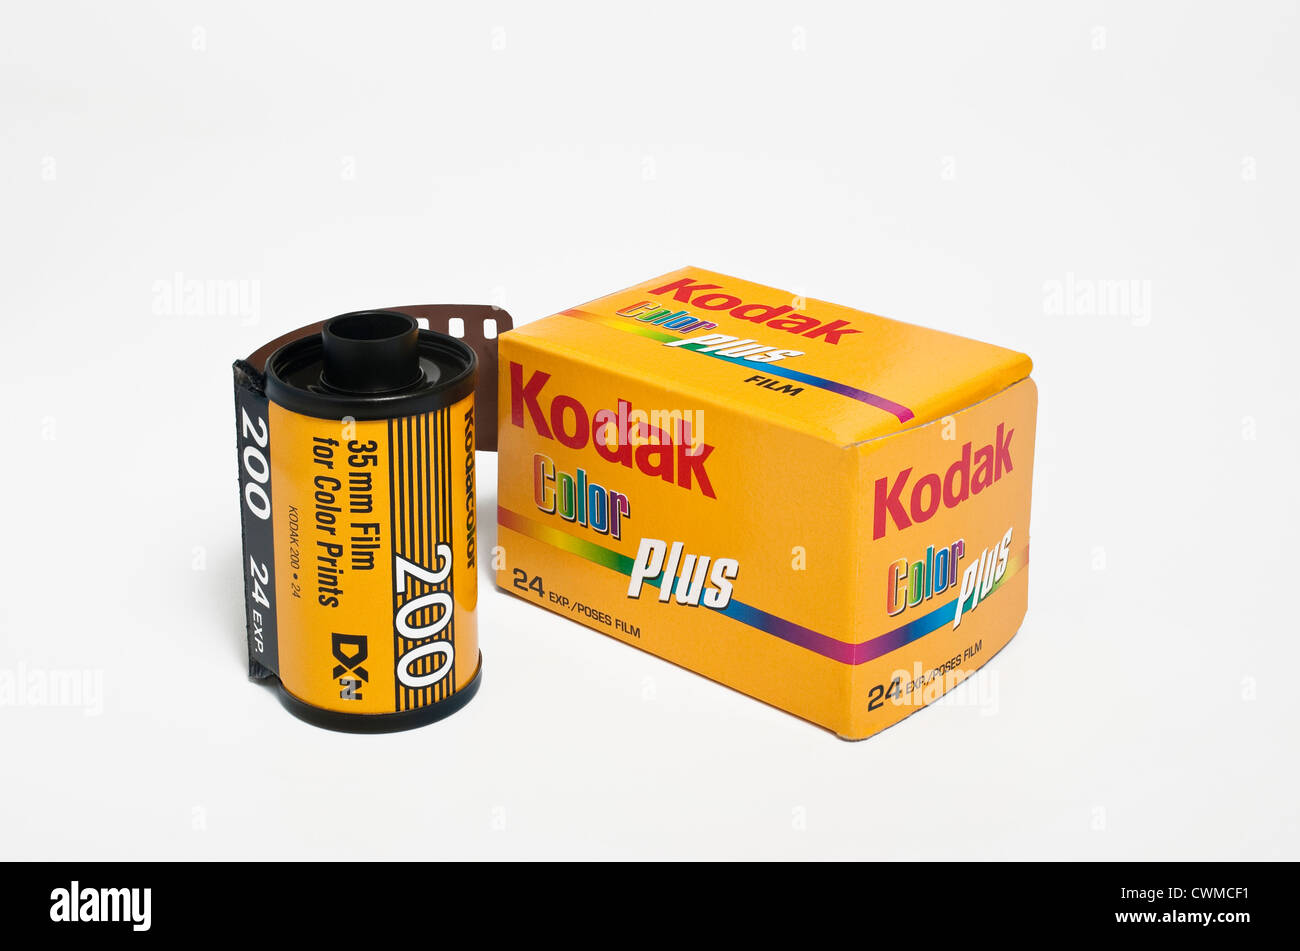 https://c8.alamy.com/comp/CWMCF1/a-roll-of-35mm-kodak-color-film-with-its-box-packaging-CWMCF1.jpg